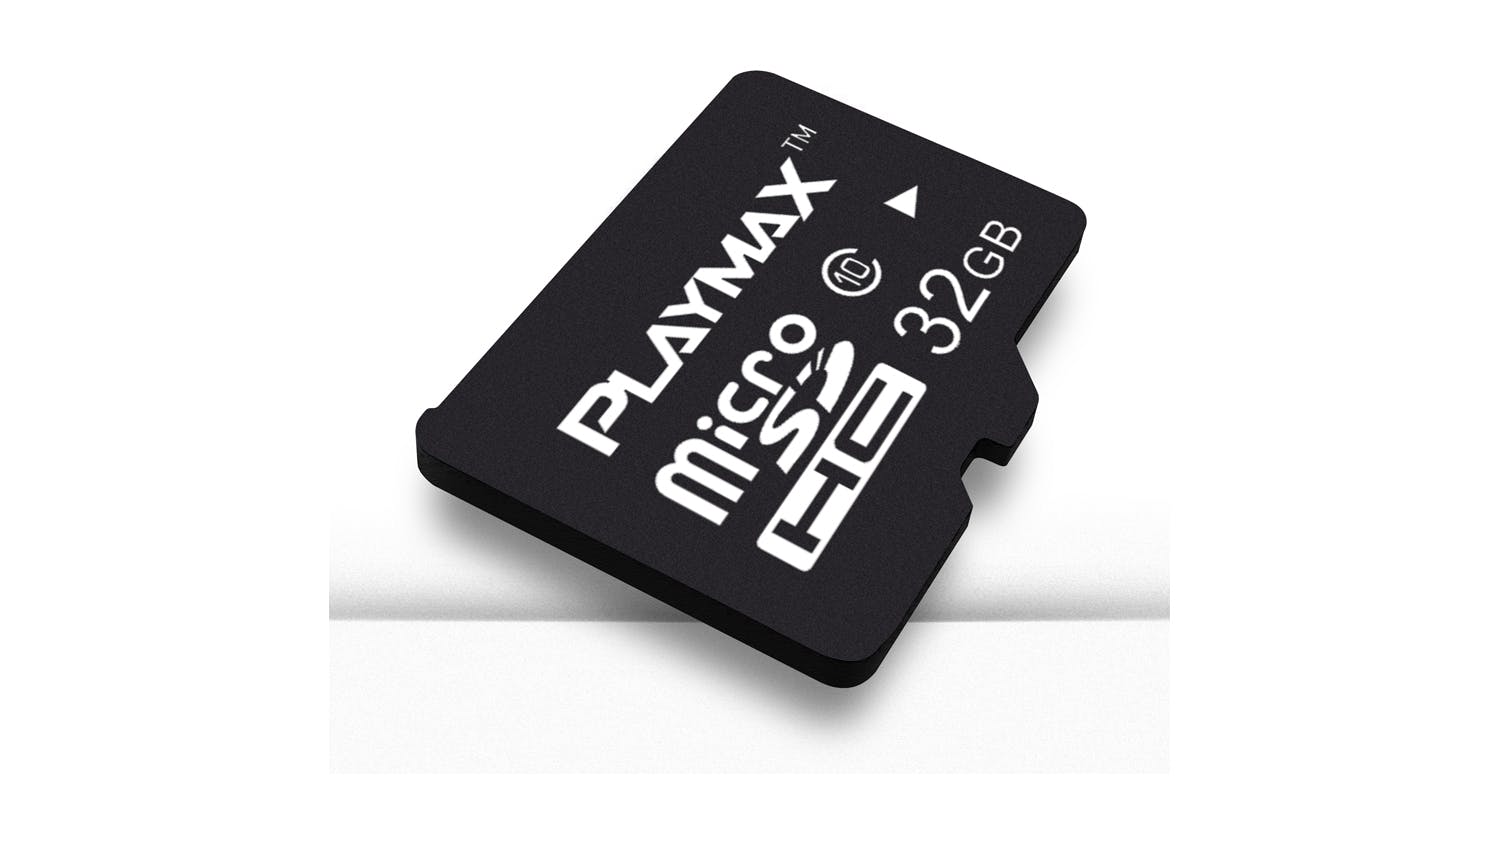 Playmax NSW Memory Card 32GB